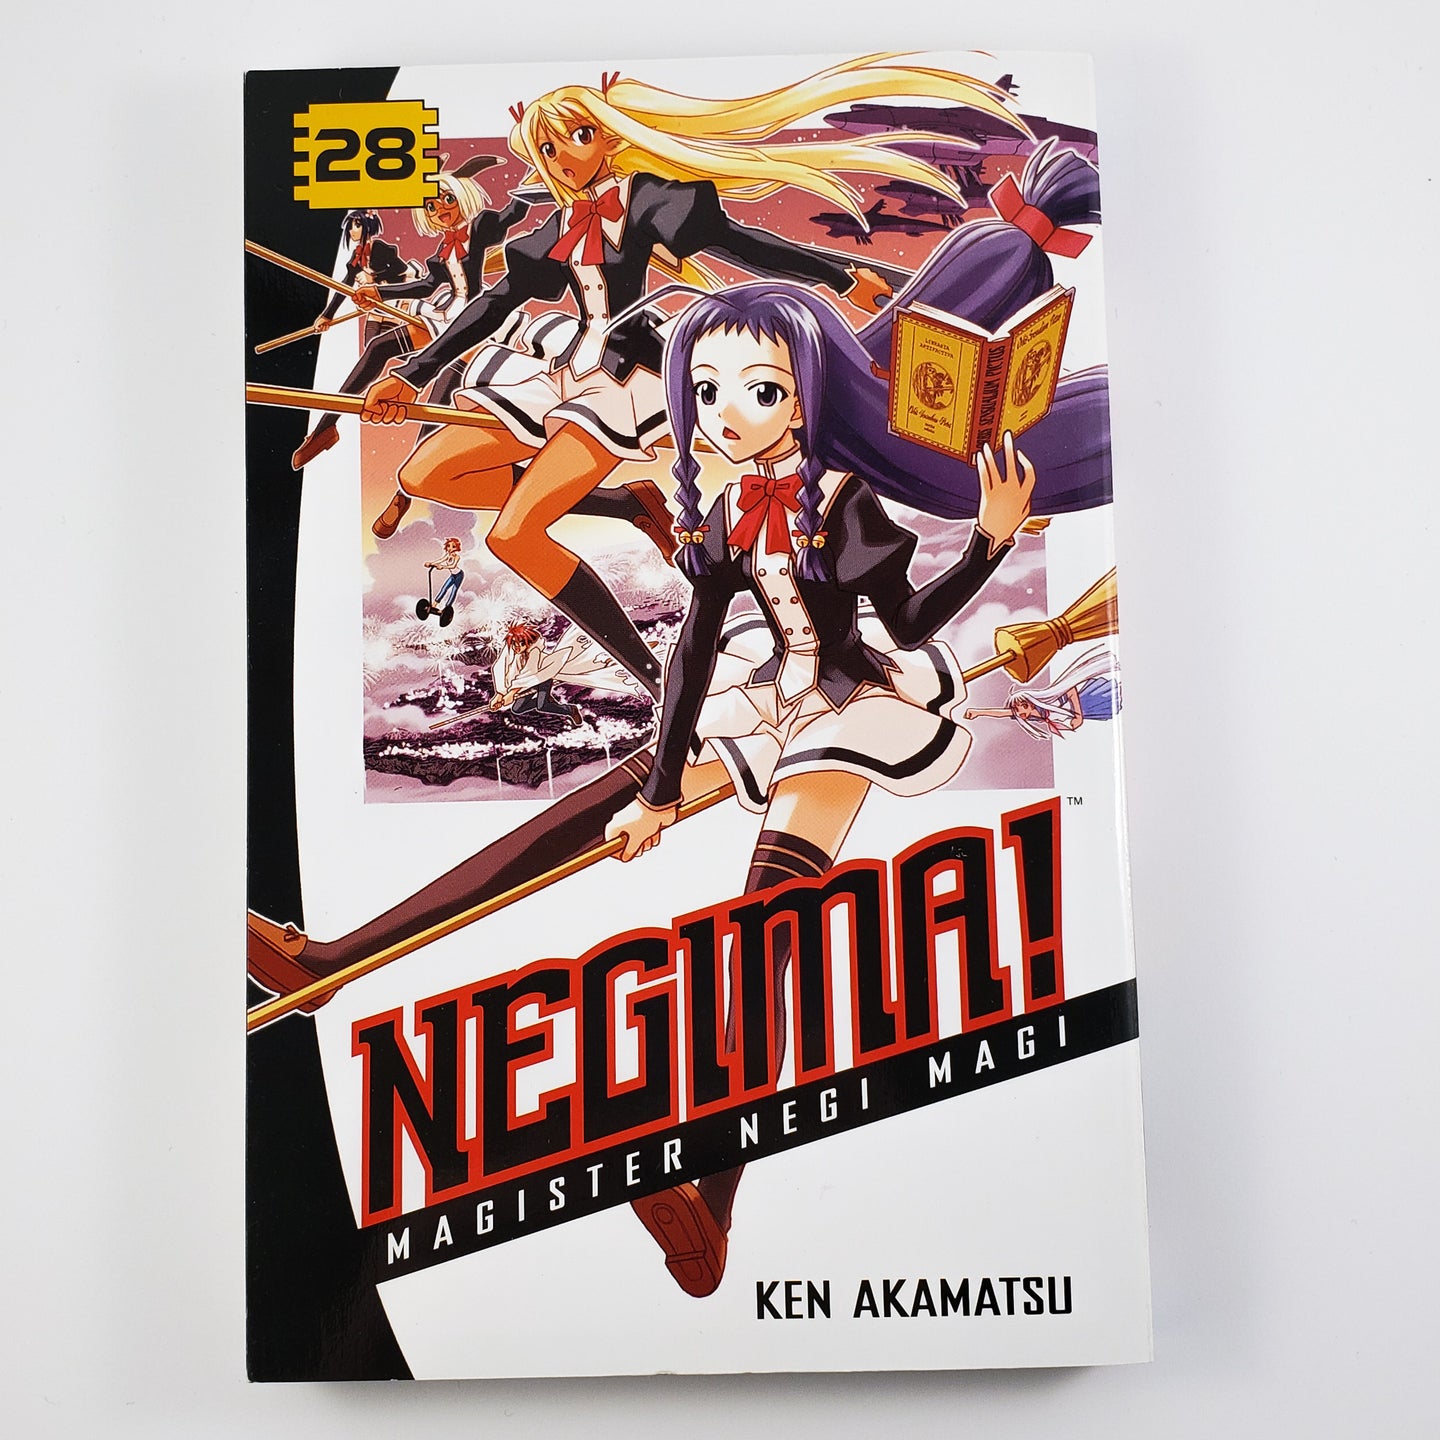 Negima! Volume 28. Manga by Ken Akamatsu